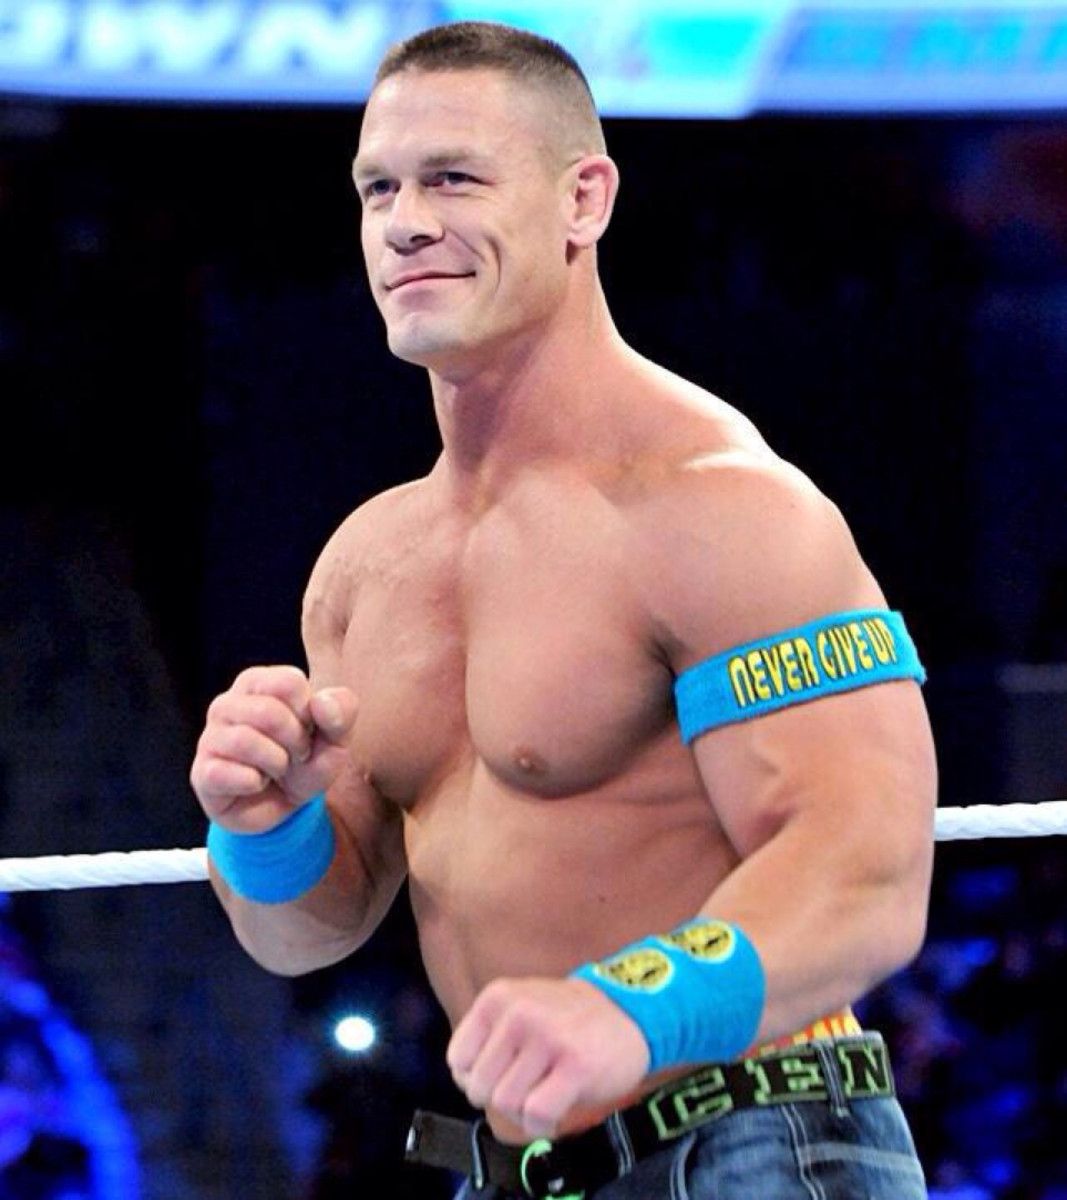 John Cena: How tall is he? Is he married to Nikki Bella?